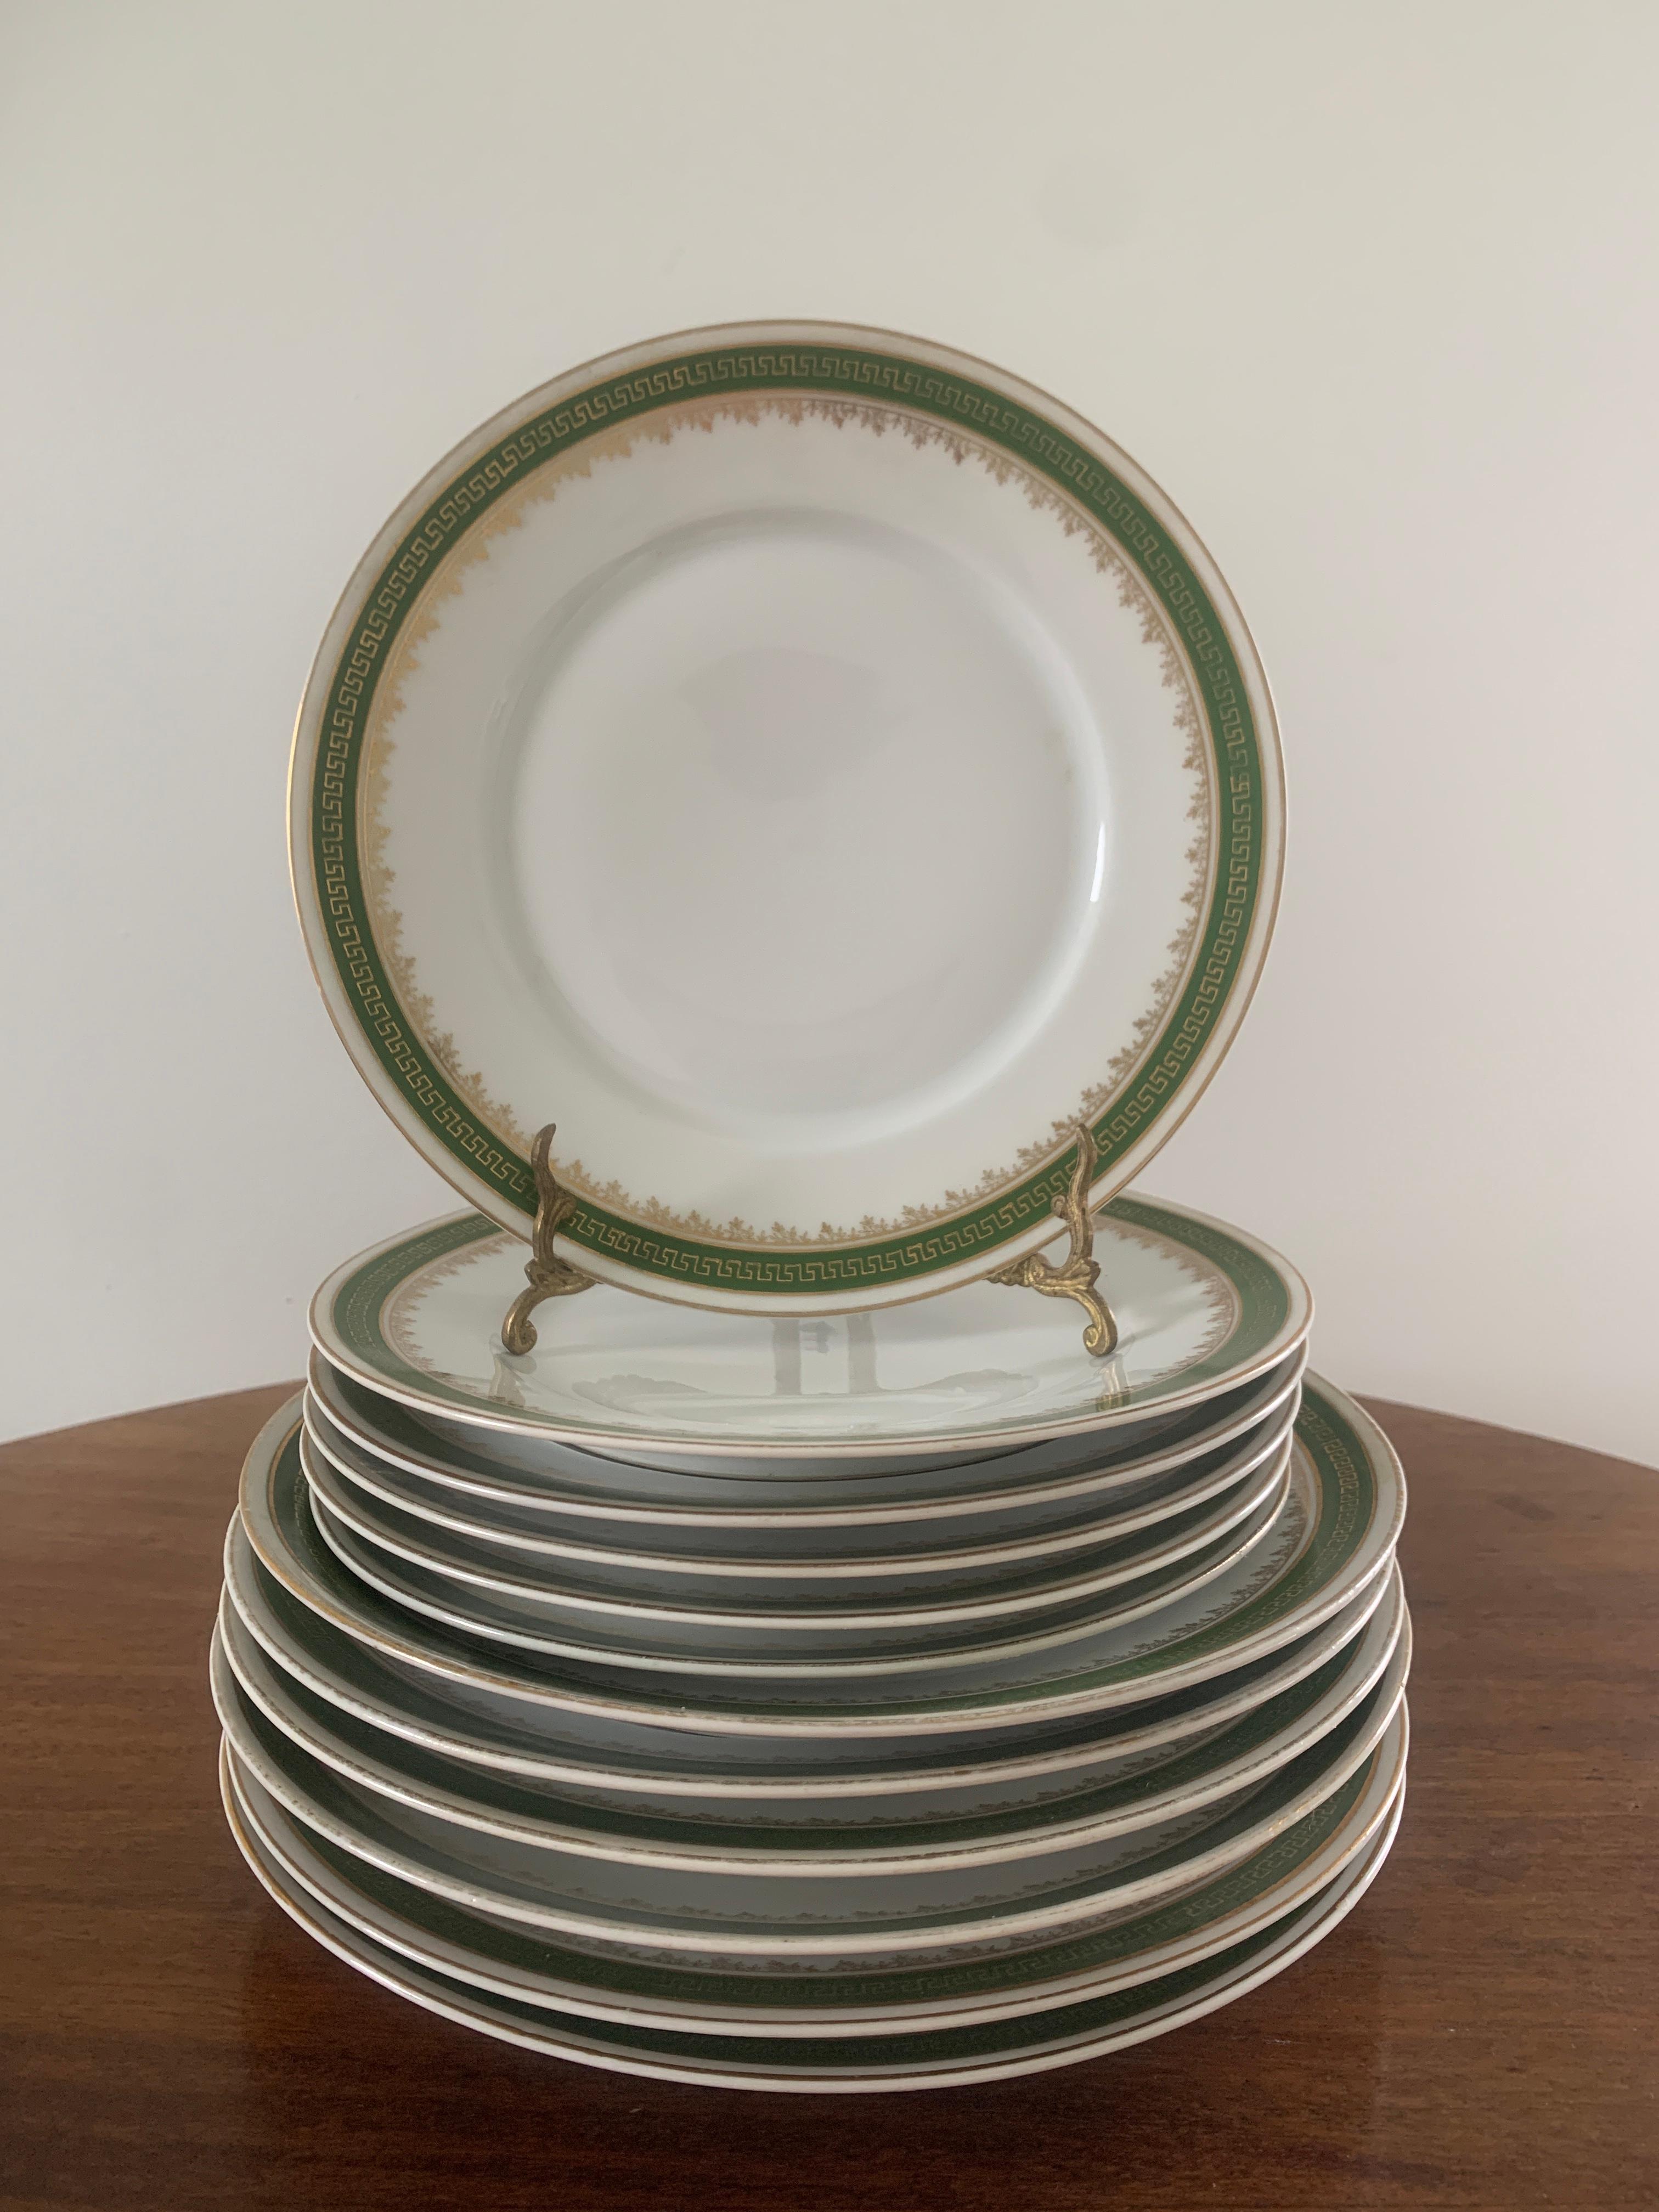 Antique German Greek Key Rimmed Luncheon & Salad Plates by C. Tielsch Altwasser For Sale 1